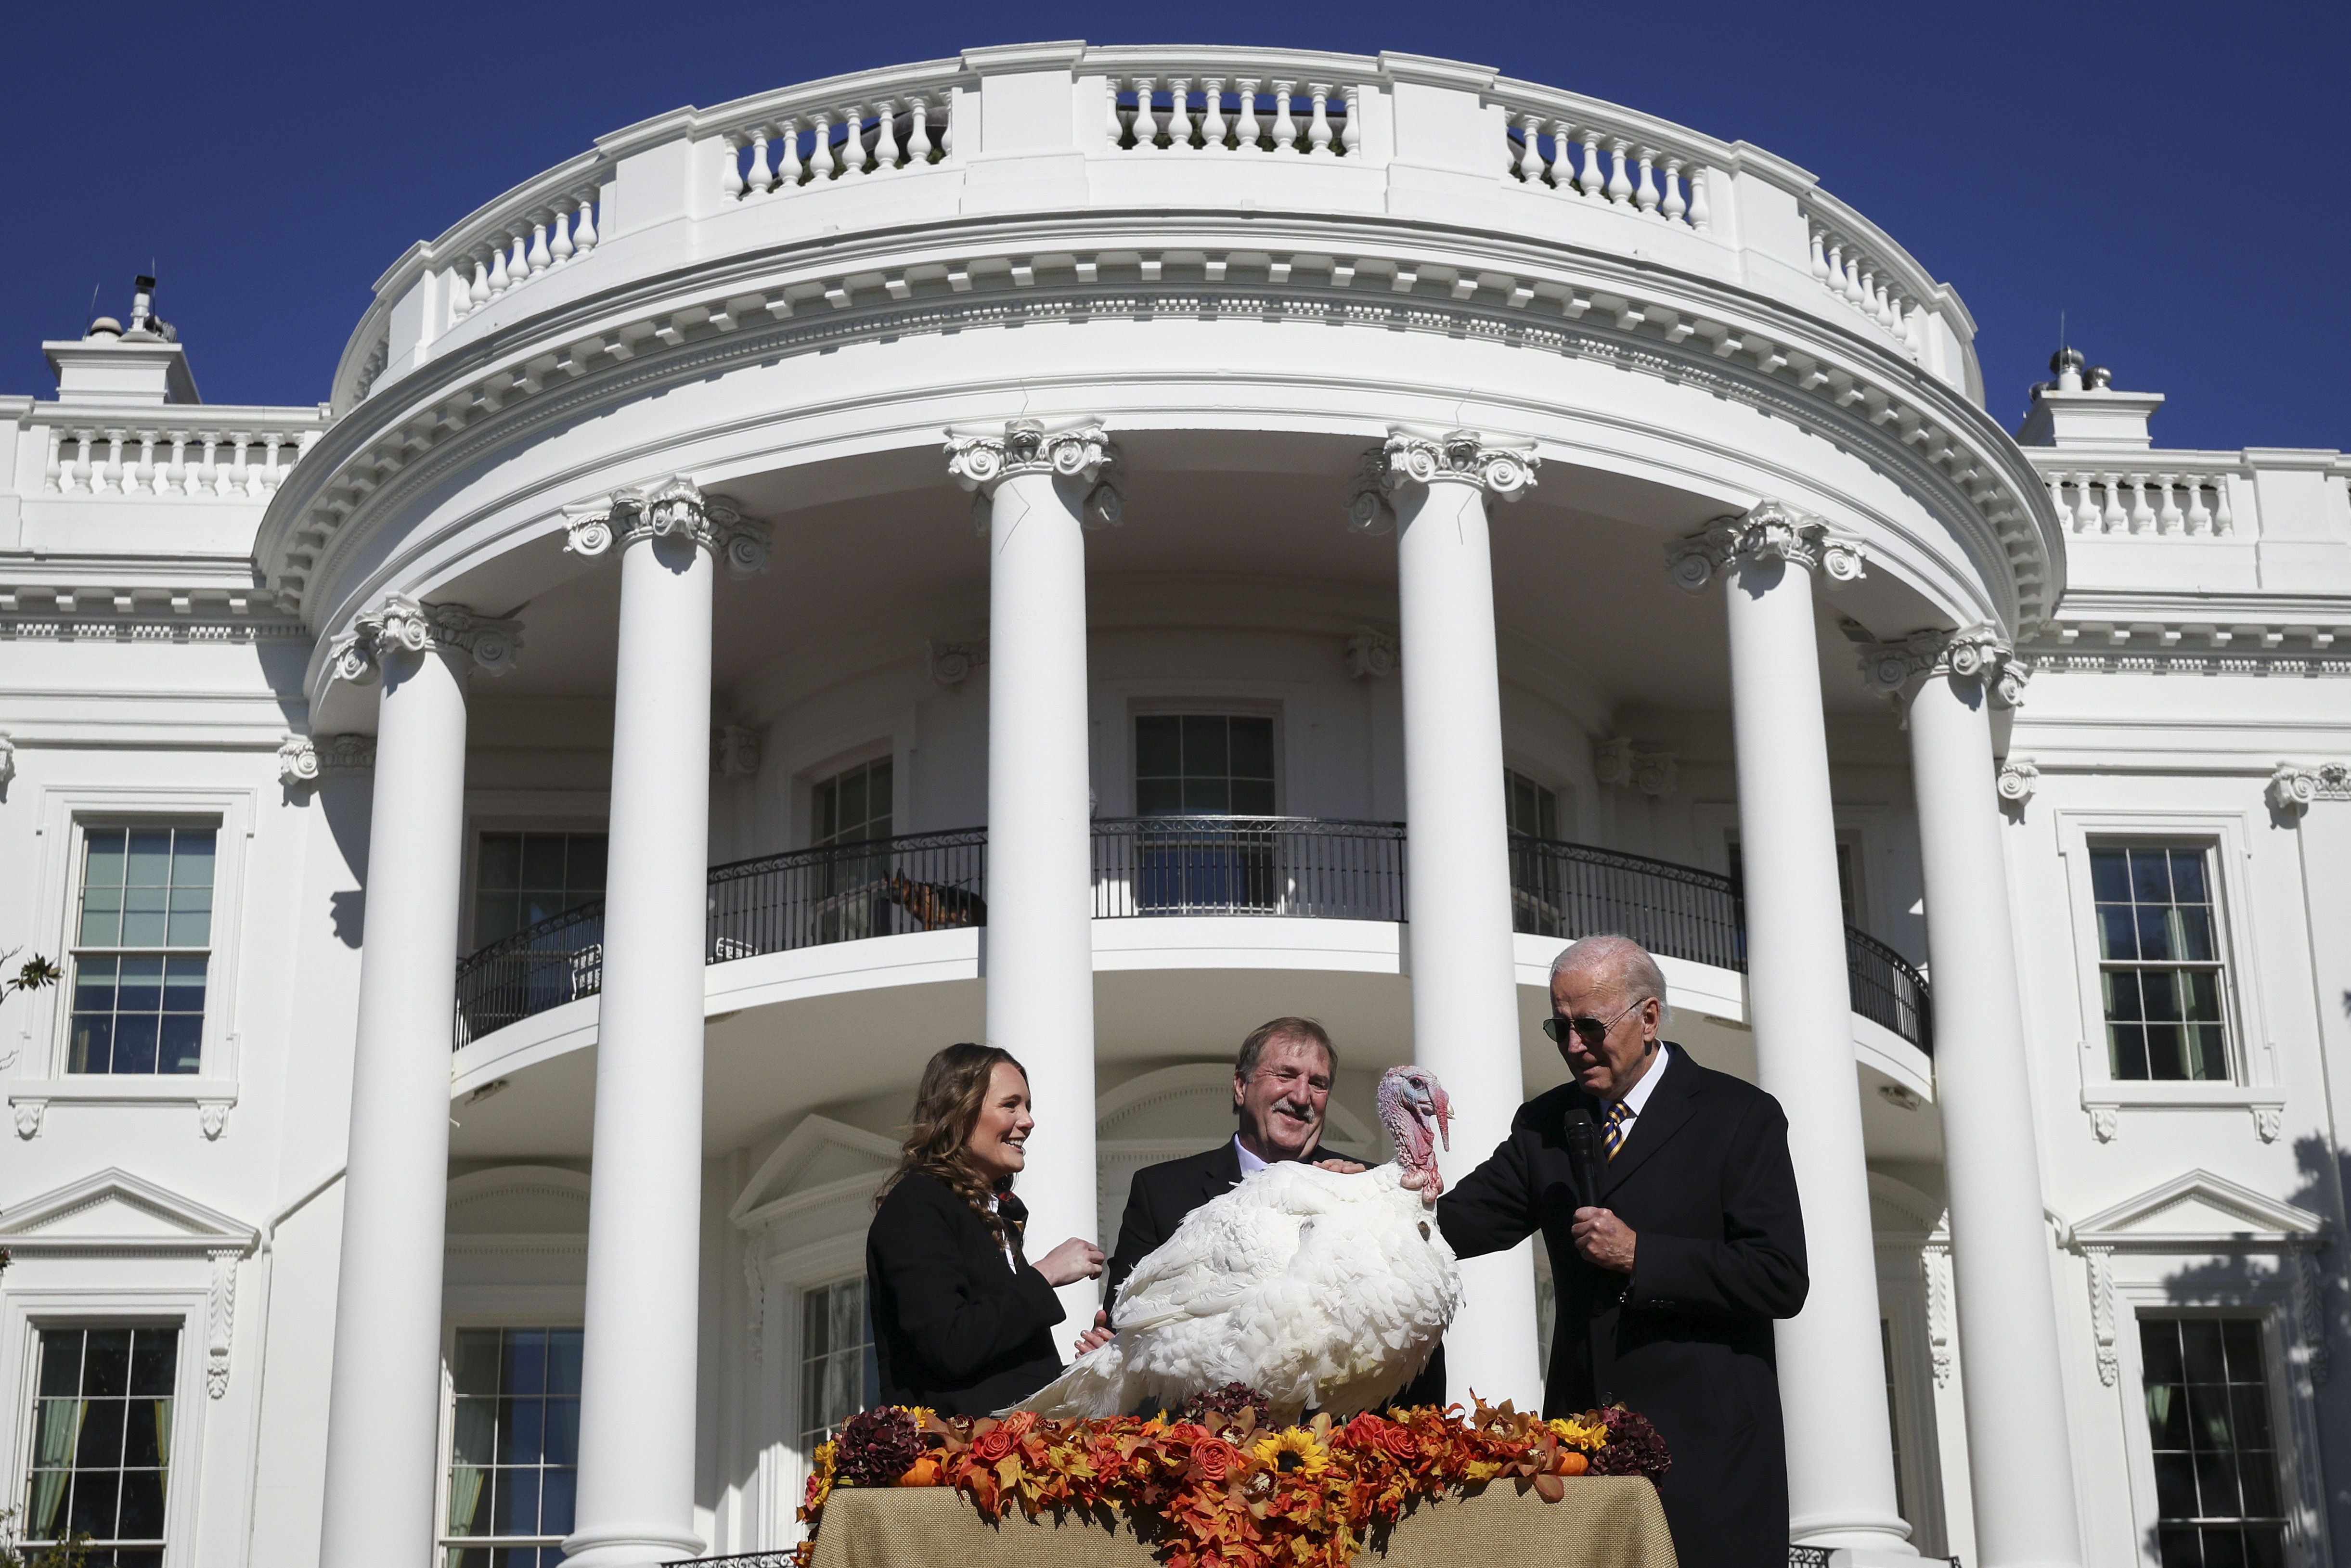 Biden pardoning a turkey